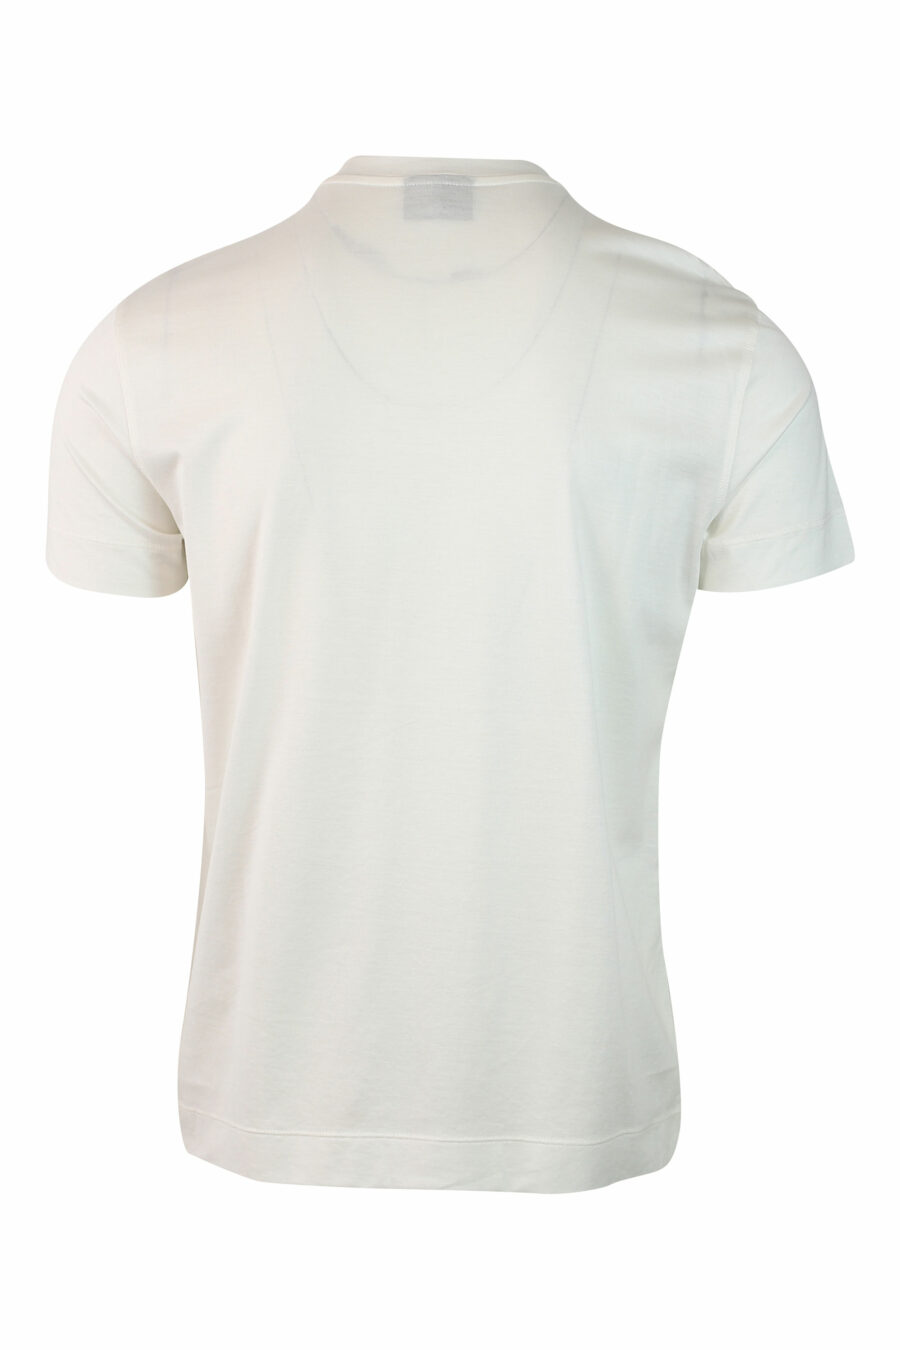 Camiseta blanca con maxilogo redondo - IMG 0148